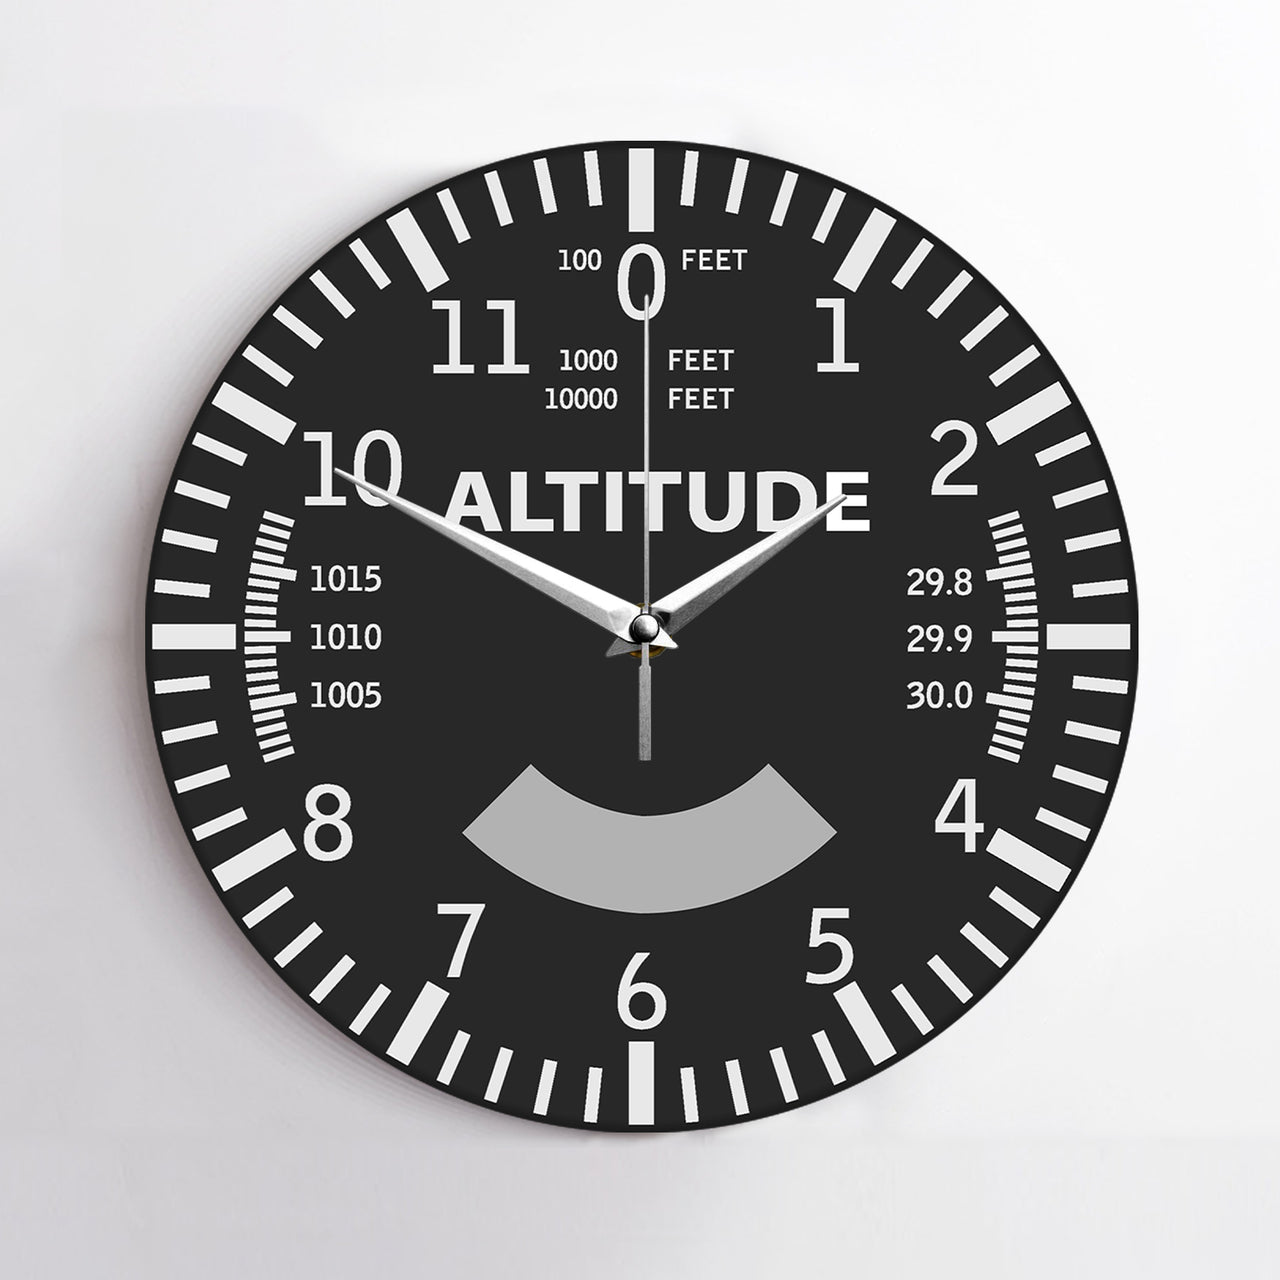 Airplane Instruments (Altitude) Designed Wall Clocks